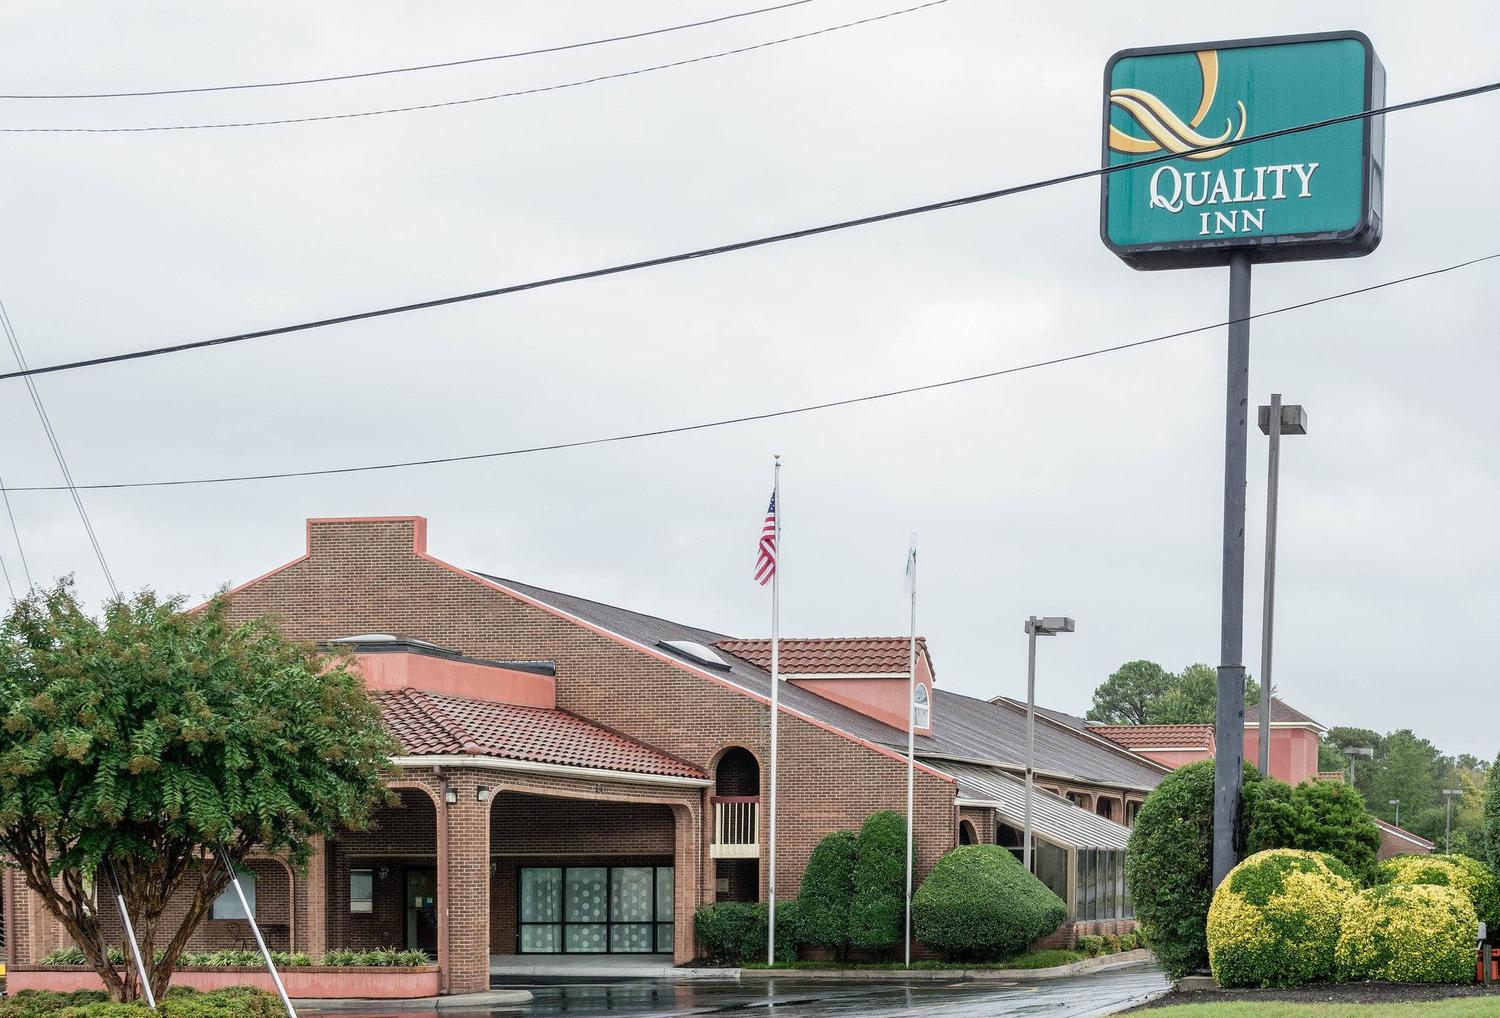 Quality Inn at Fort Lee, Hopewell, VA Jobs | Hospitality Online